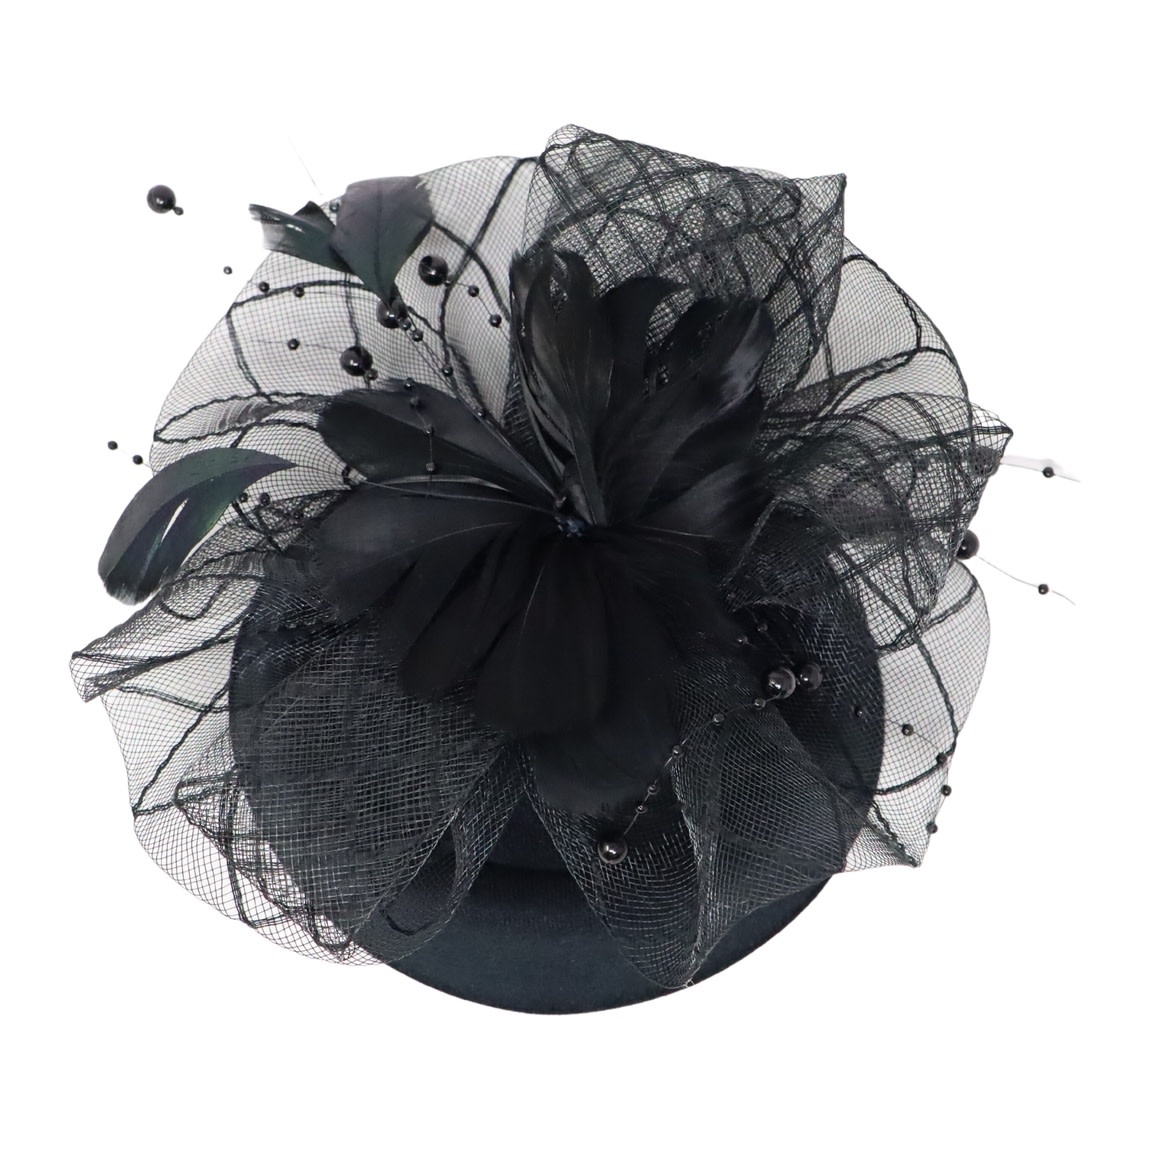 FLEURISH Black Fascinator Beaded Net Bow Cup w Feathers